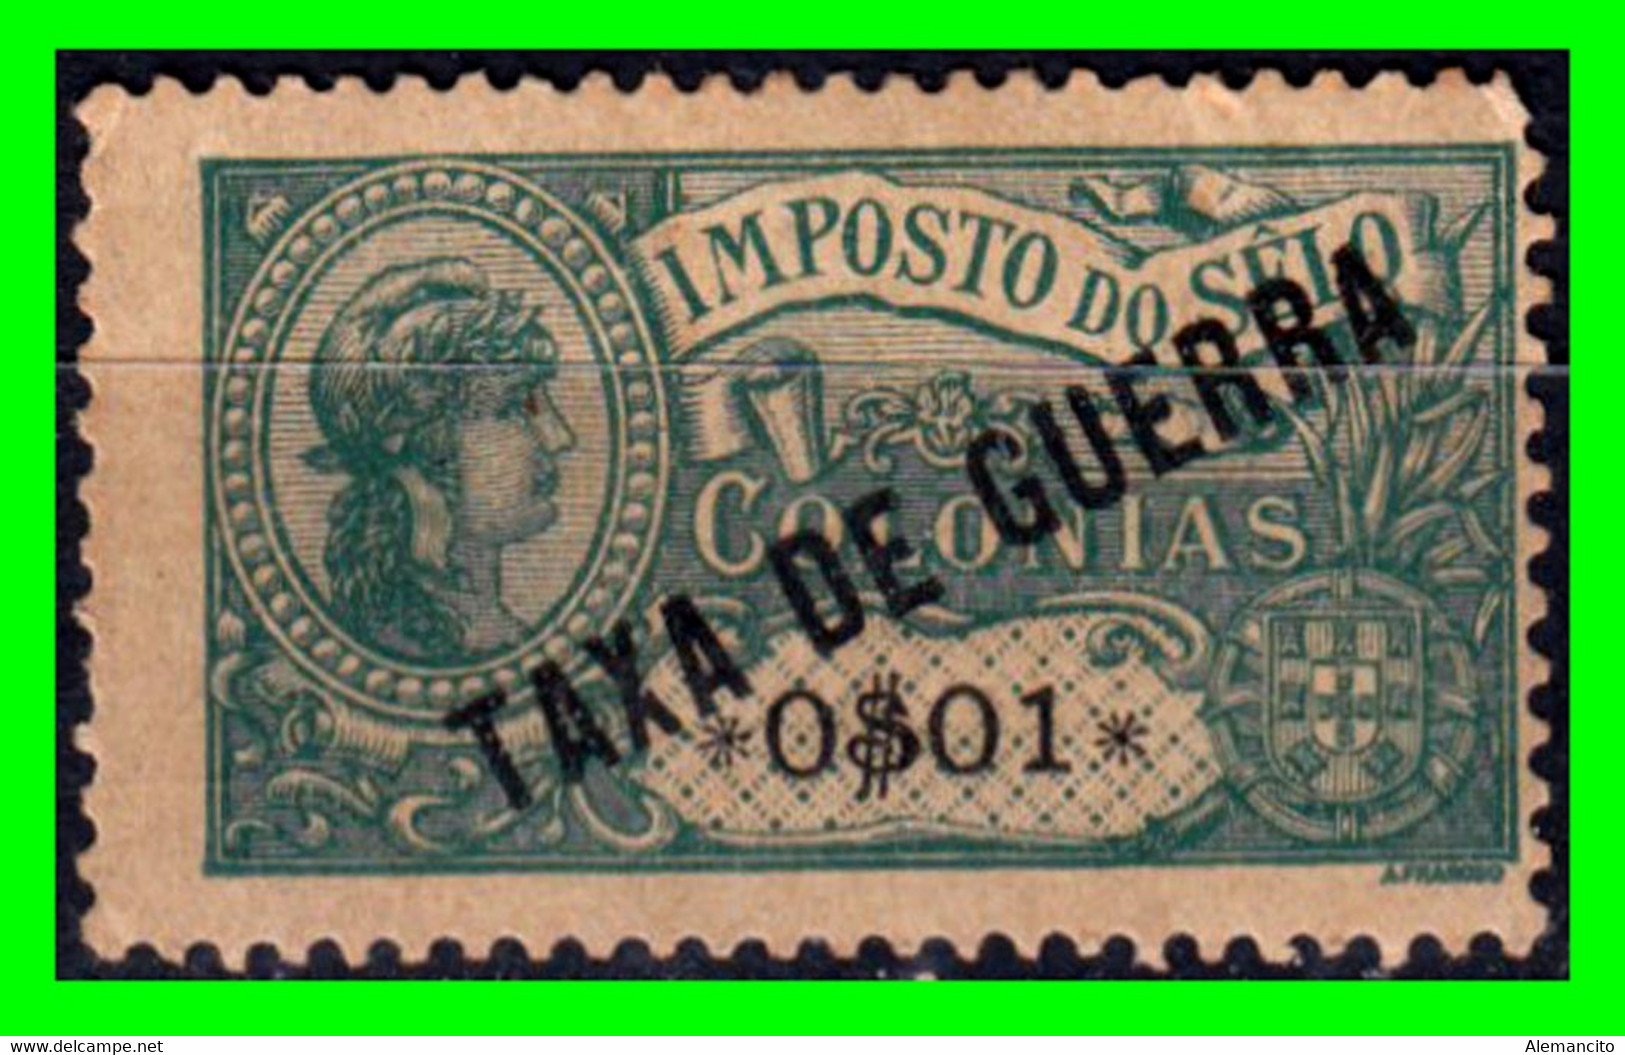 PORTUGAL… ( EUROPA ) SELLOS AÑO 1916 - IMPOSTO DO SELO INGRESO FISCALES DE LA GUERRA - Used Stamps